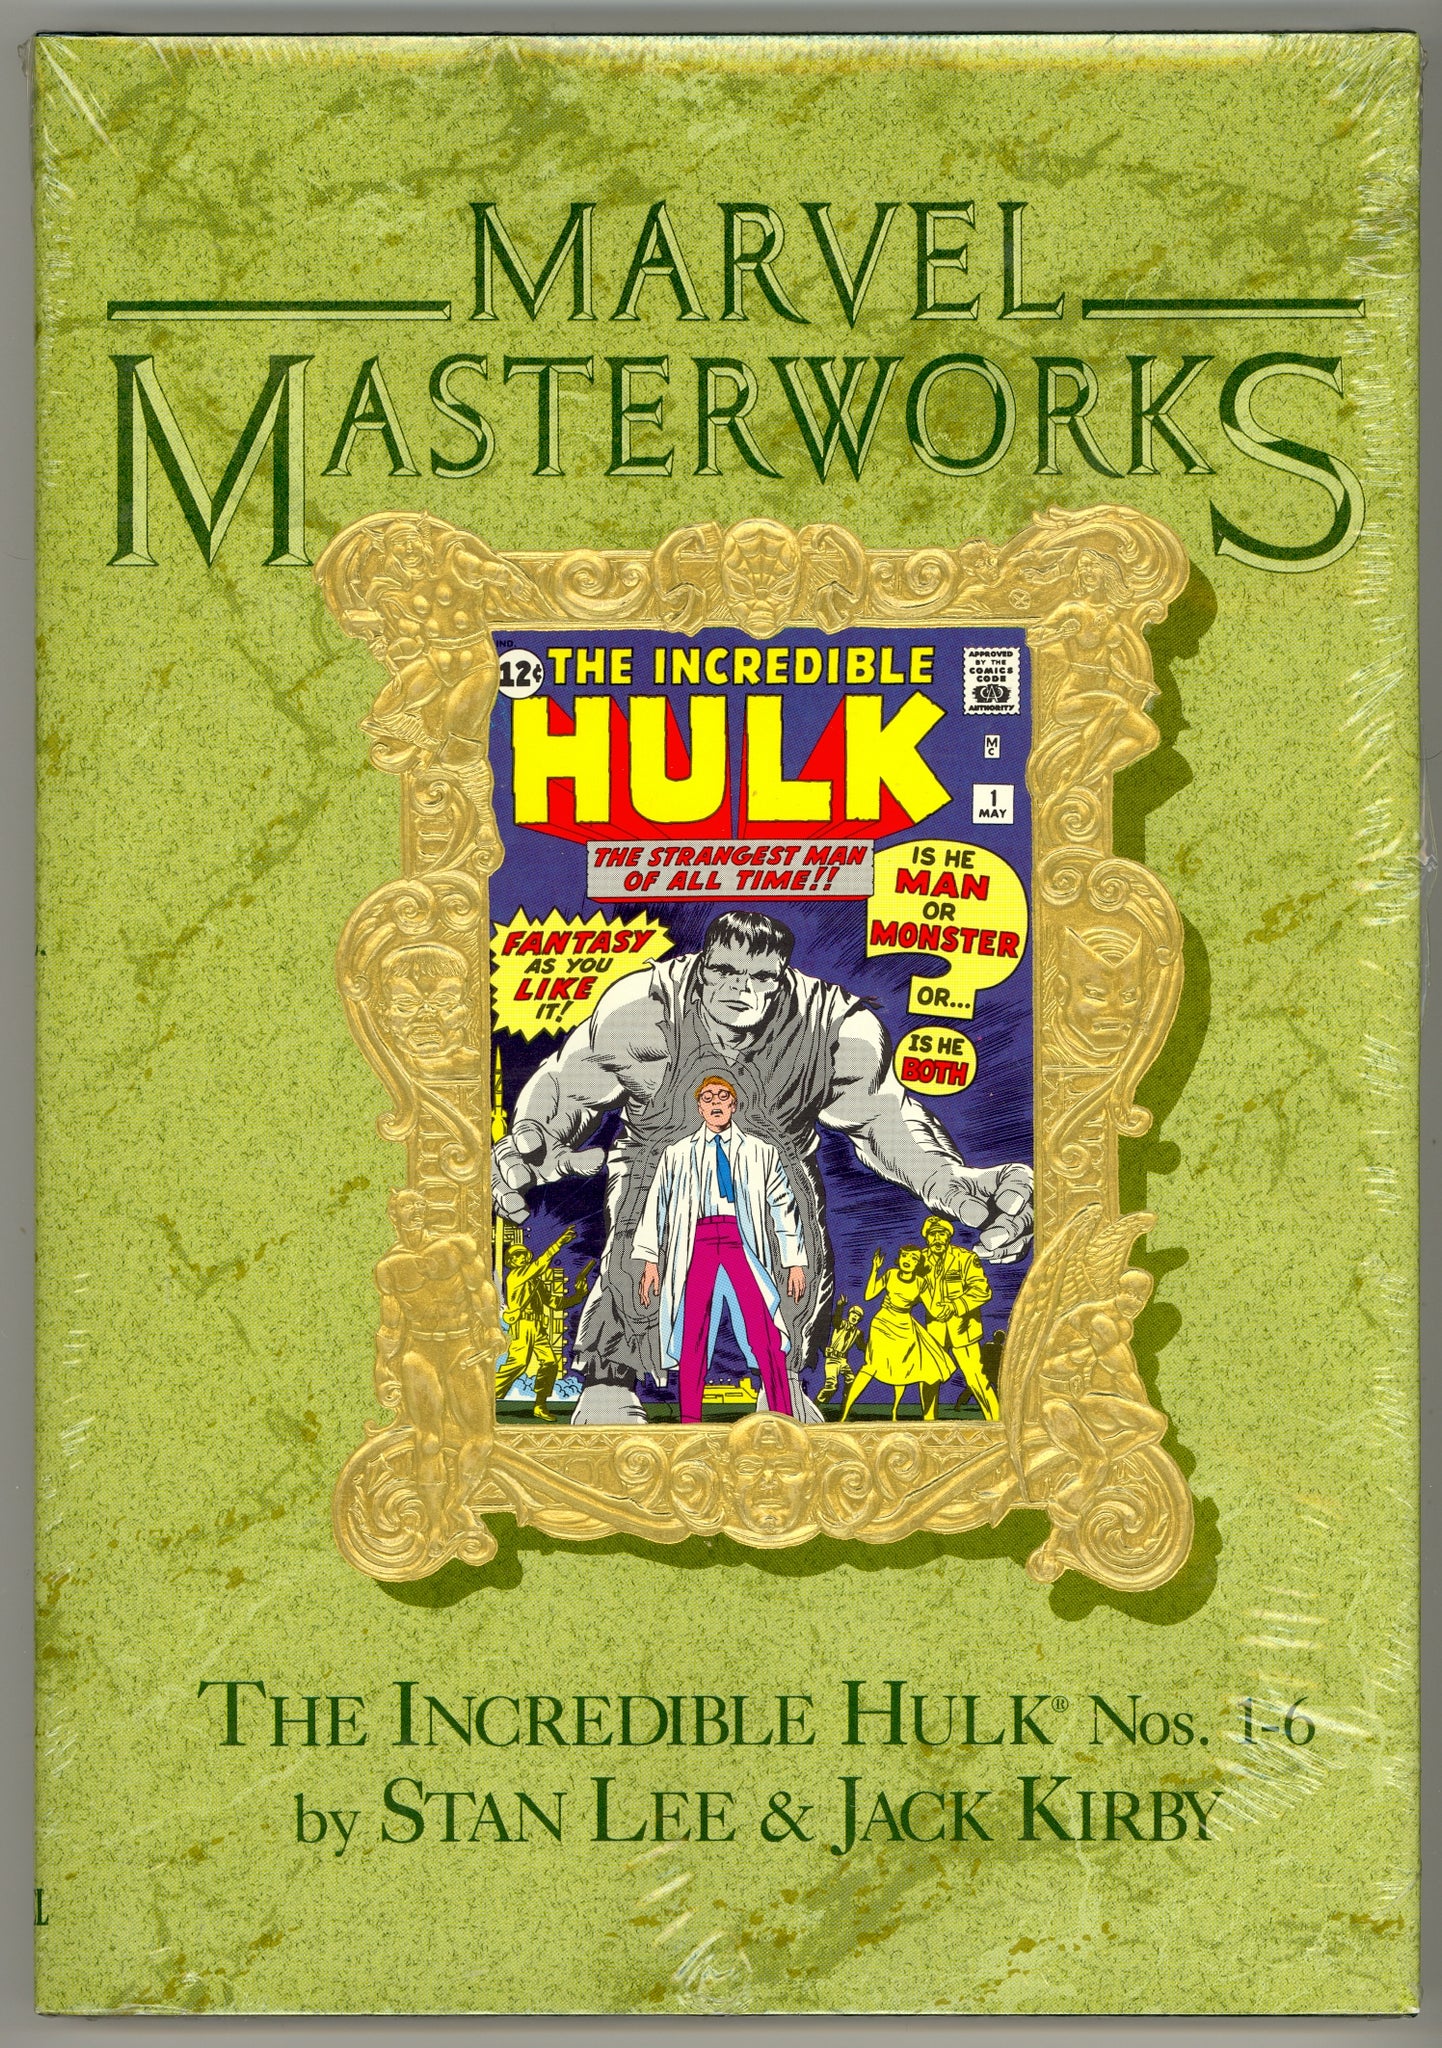 Marvel Masterworks volume 8 Incredible Hulk issues 1-6, 1st printing